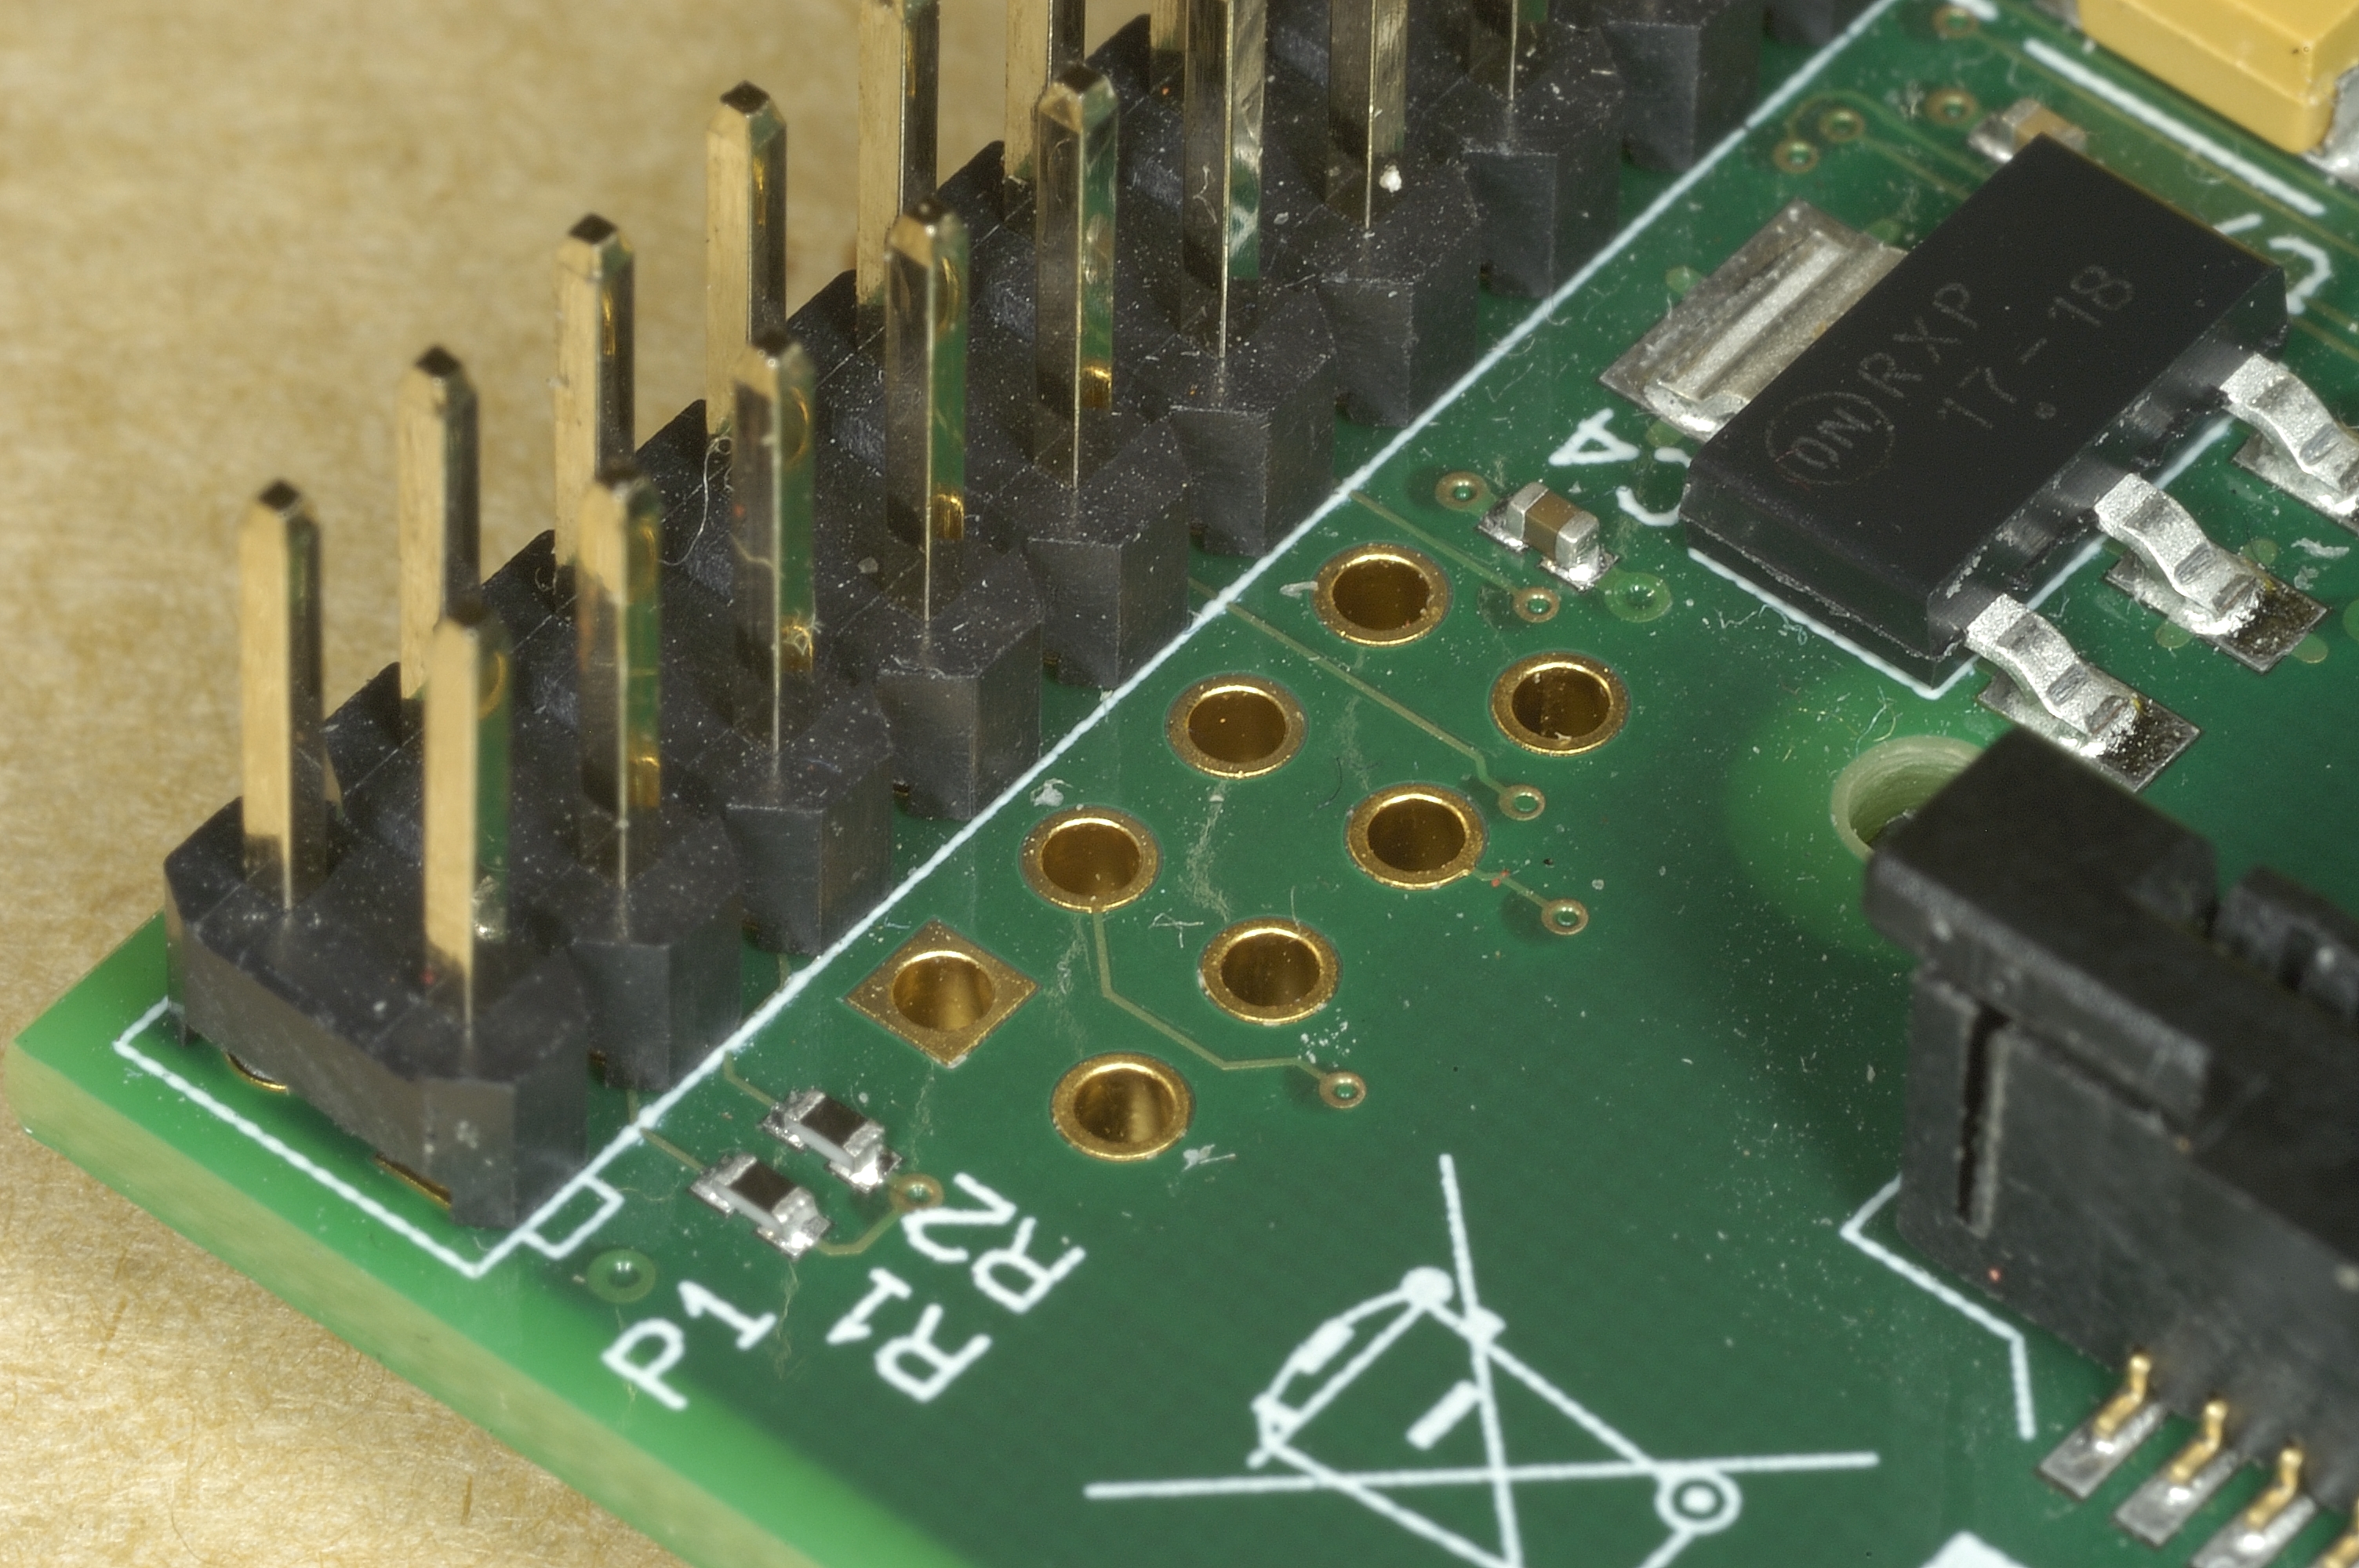 Raspberry Pi Zero 2 WH Kit GPIO Pins Soldered Board with Case